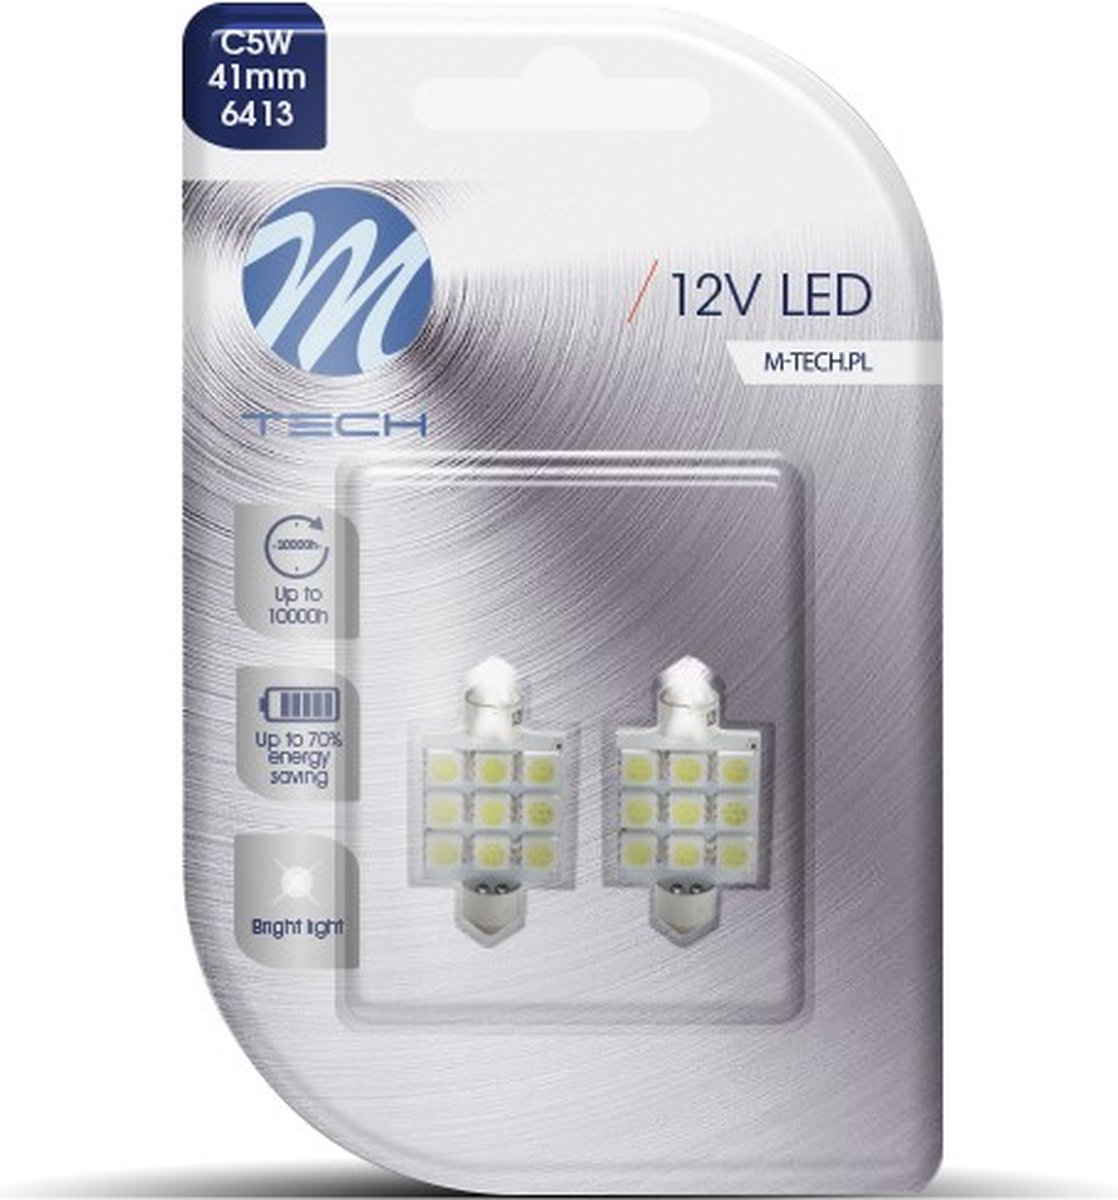 M-Tech LED C5W 12V 41mm - Basis 9x Led diode - Wit - Set